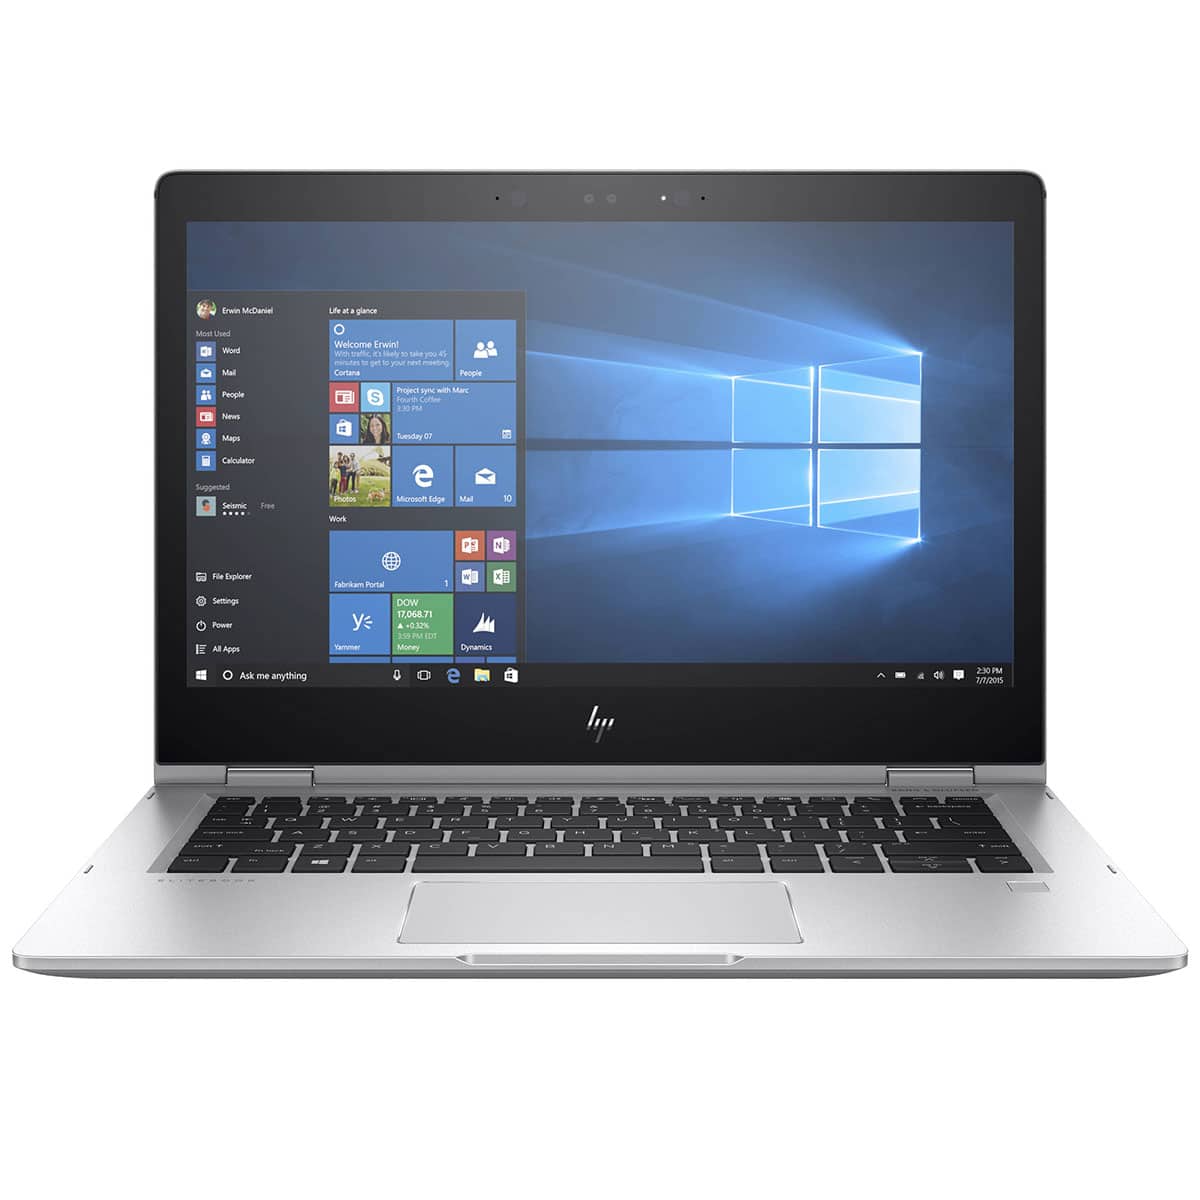 HP EliteBook x360 1030 G2 Notebook PC Intel Core i7 7th Gen 16GB